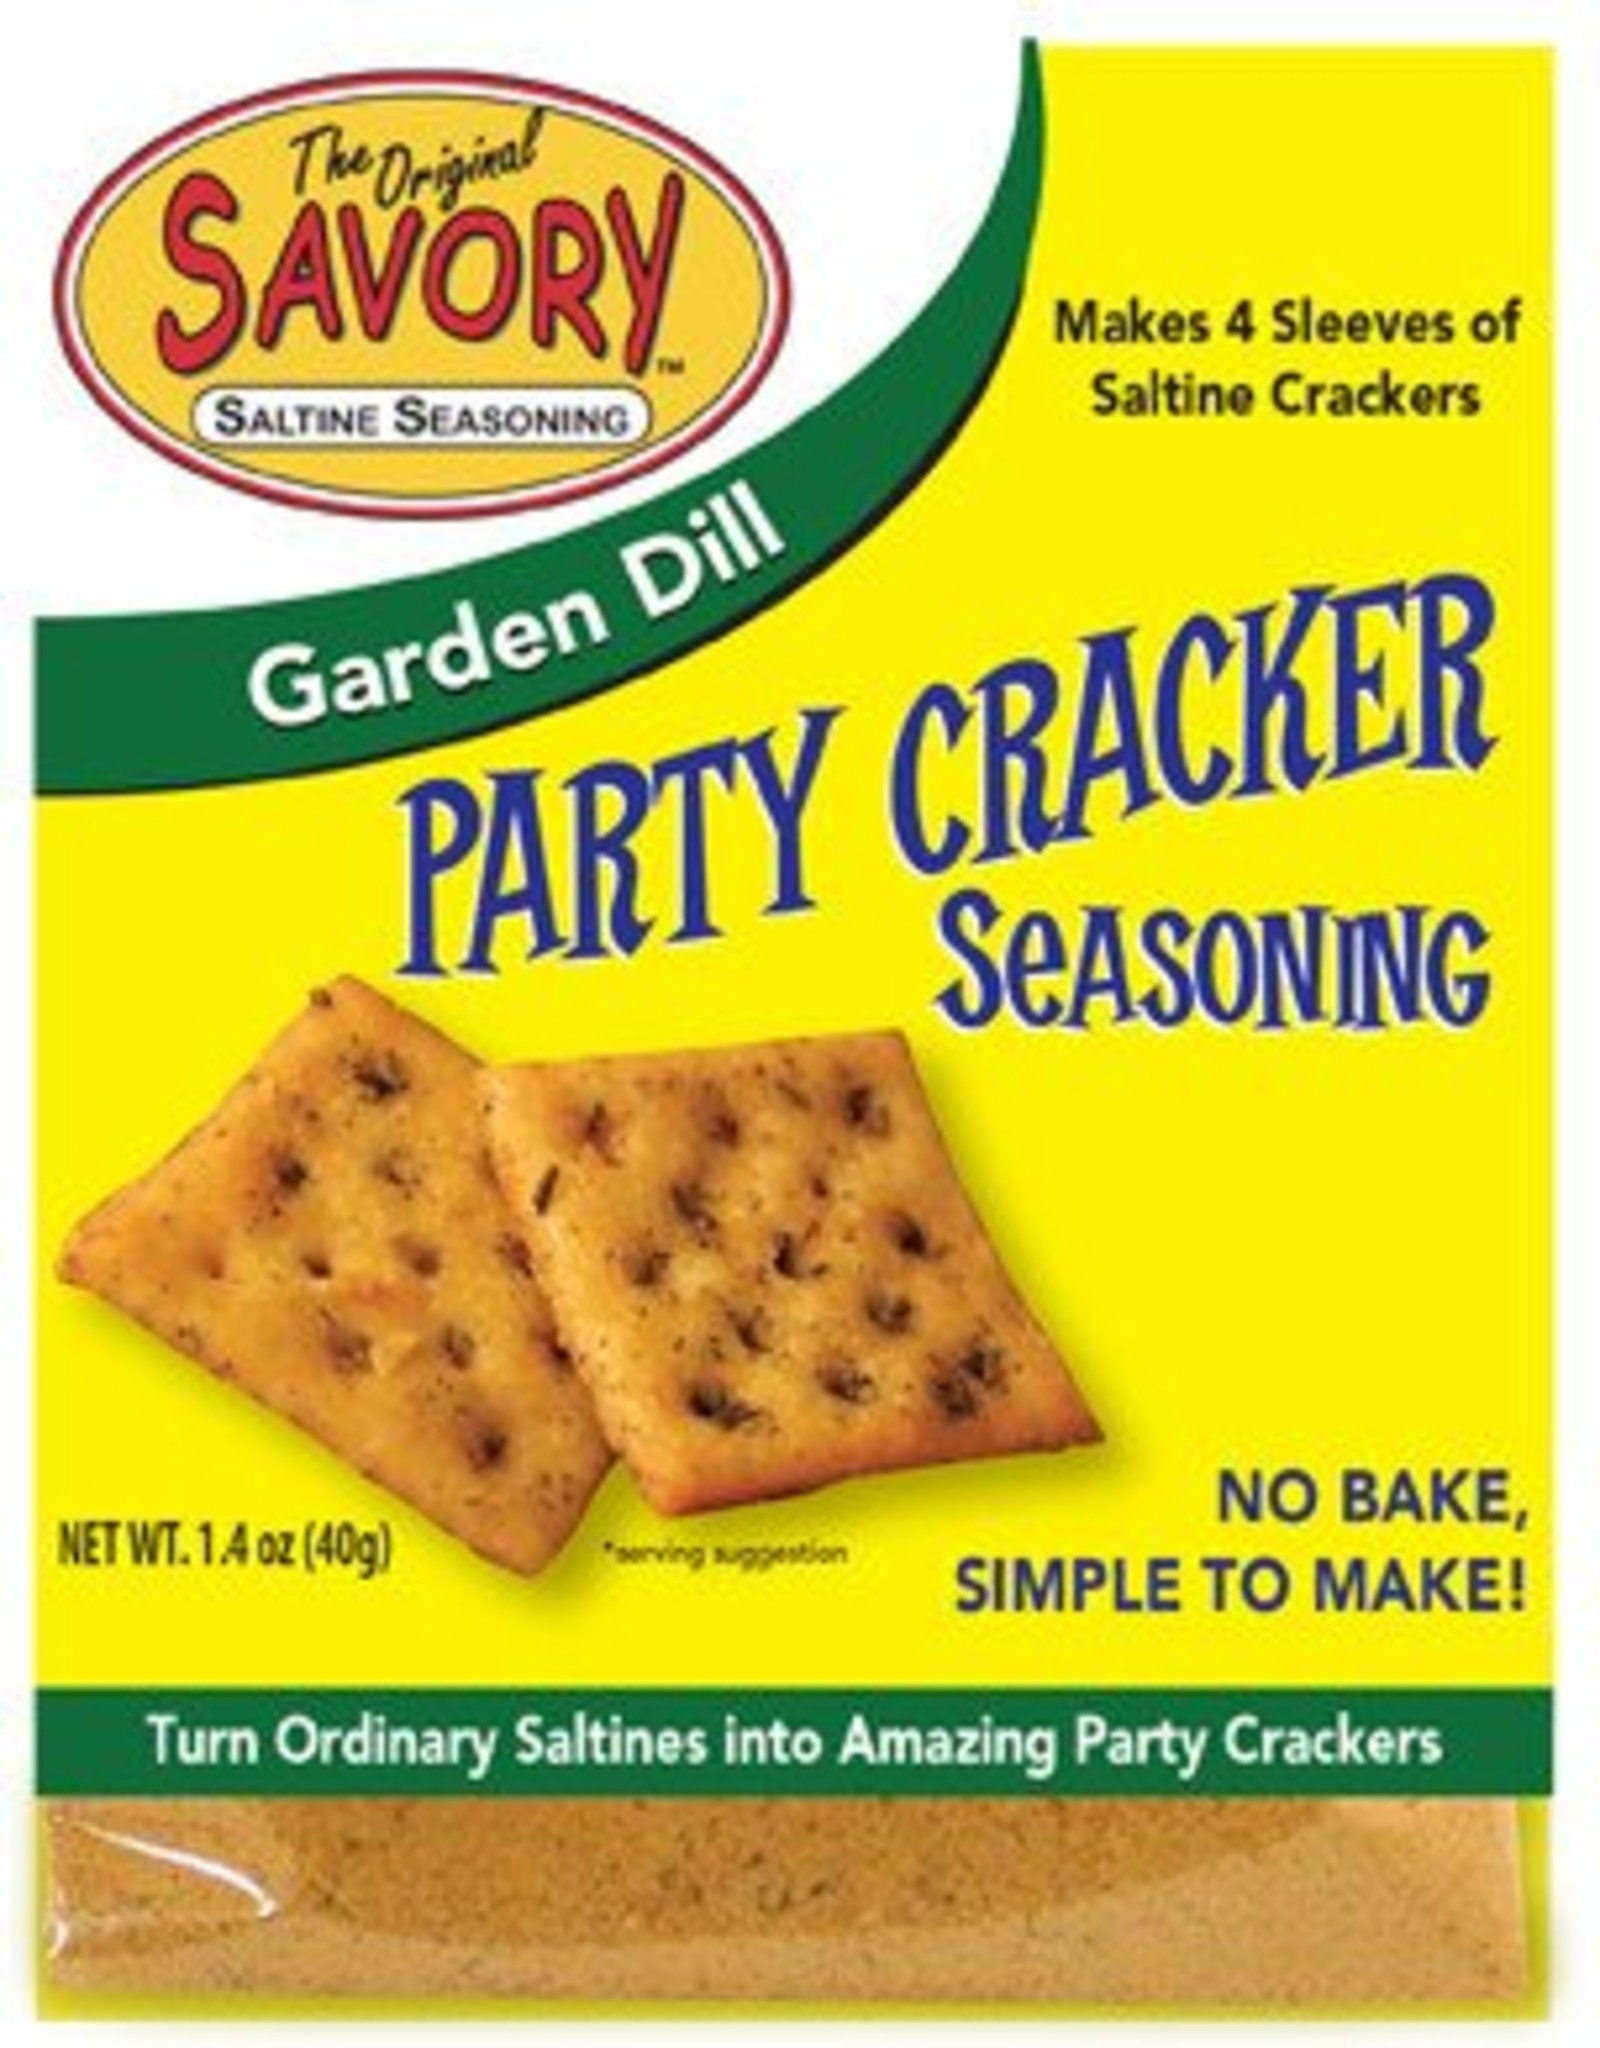 Savory Saltine Seasoning (Garden Dill)